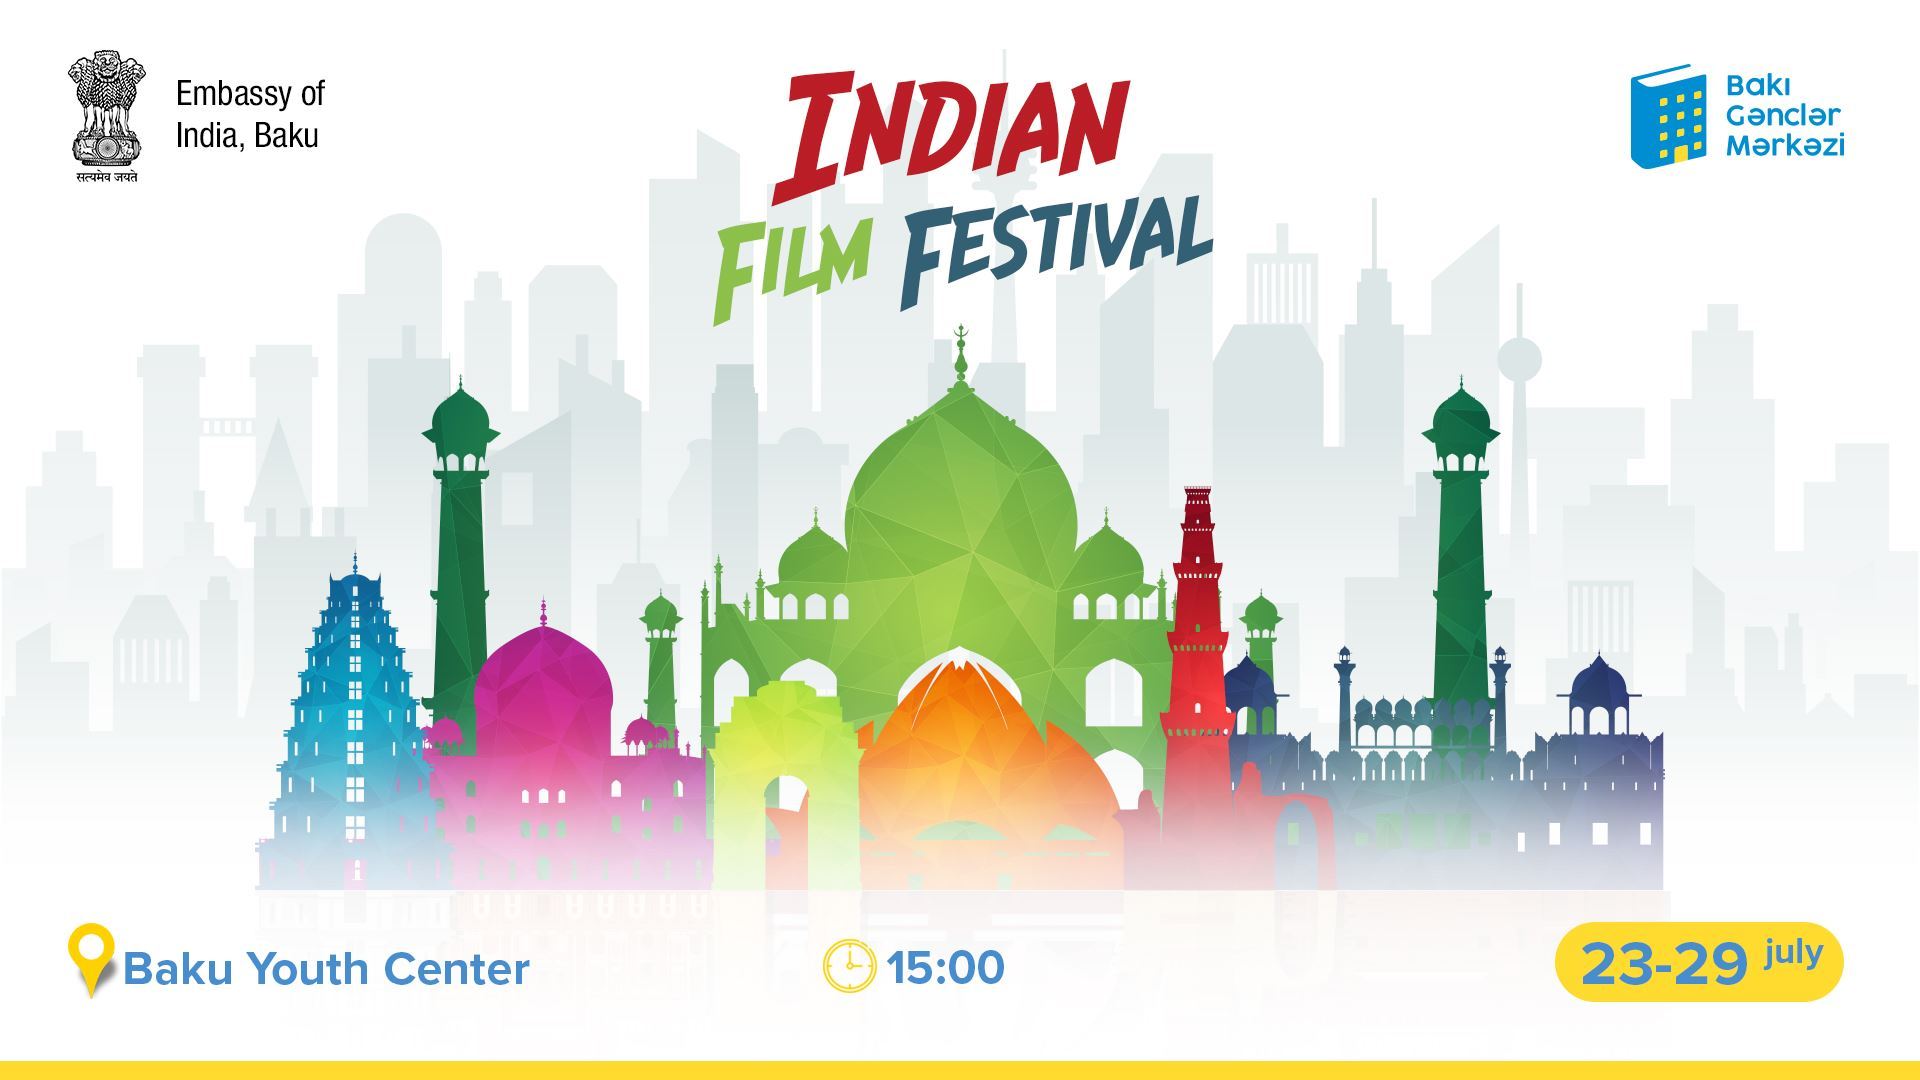 Baku to host Indian Film Festival